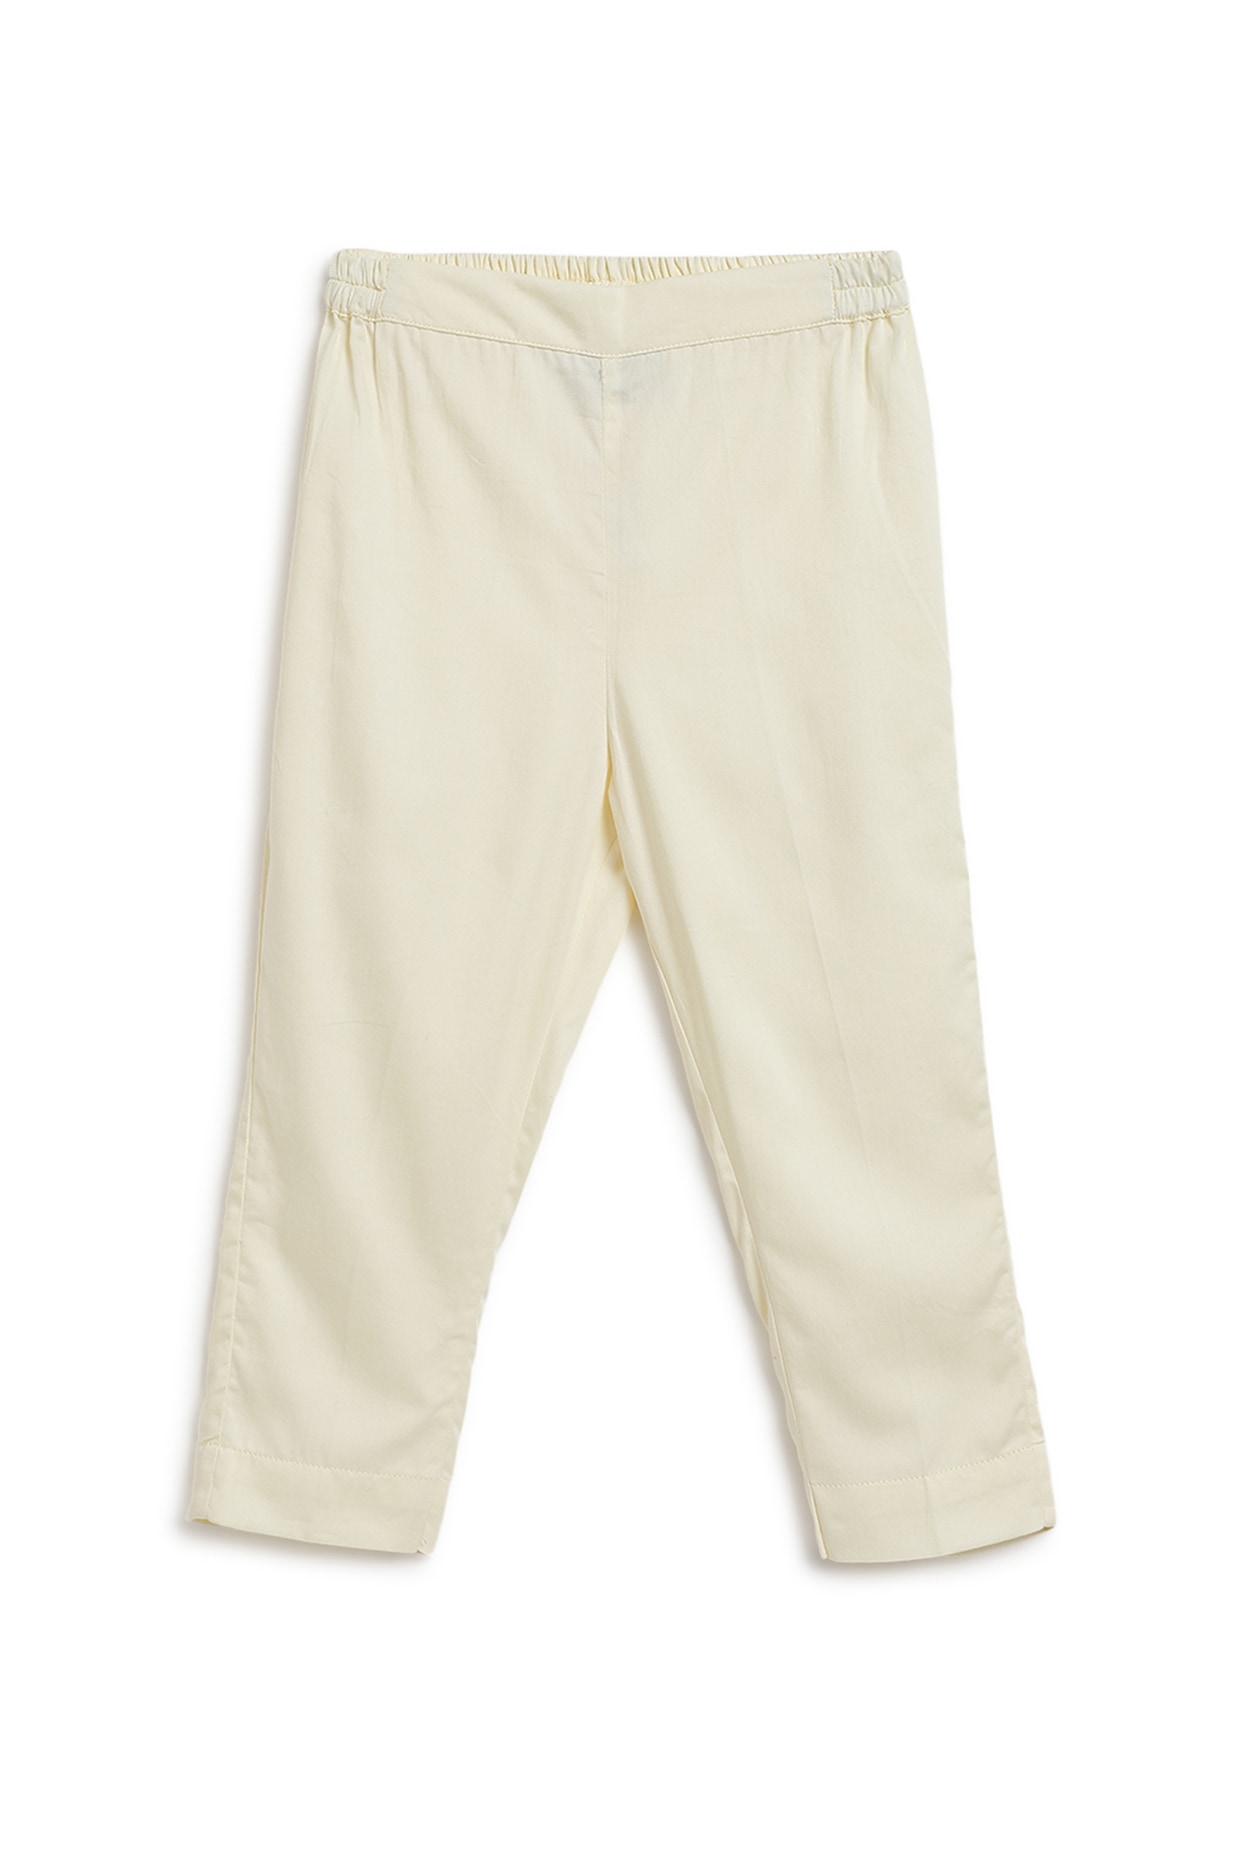 Designer Pants For Boys - Miyo Online Store - Medium